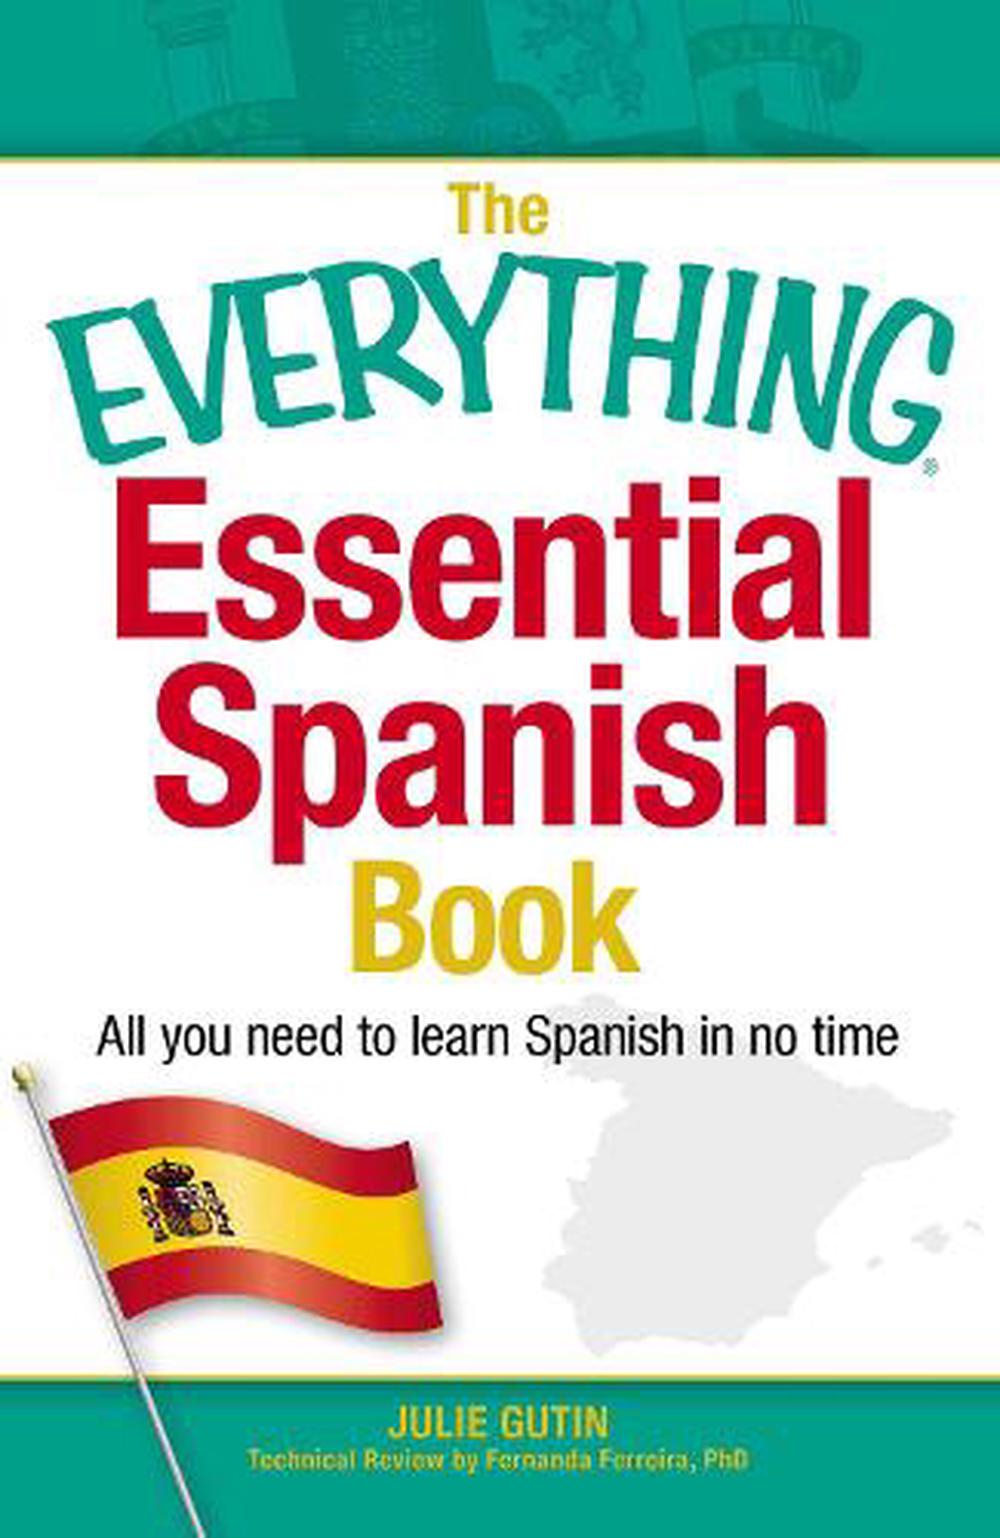 learn spanish book